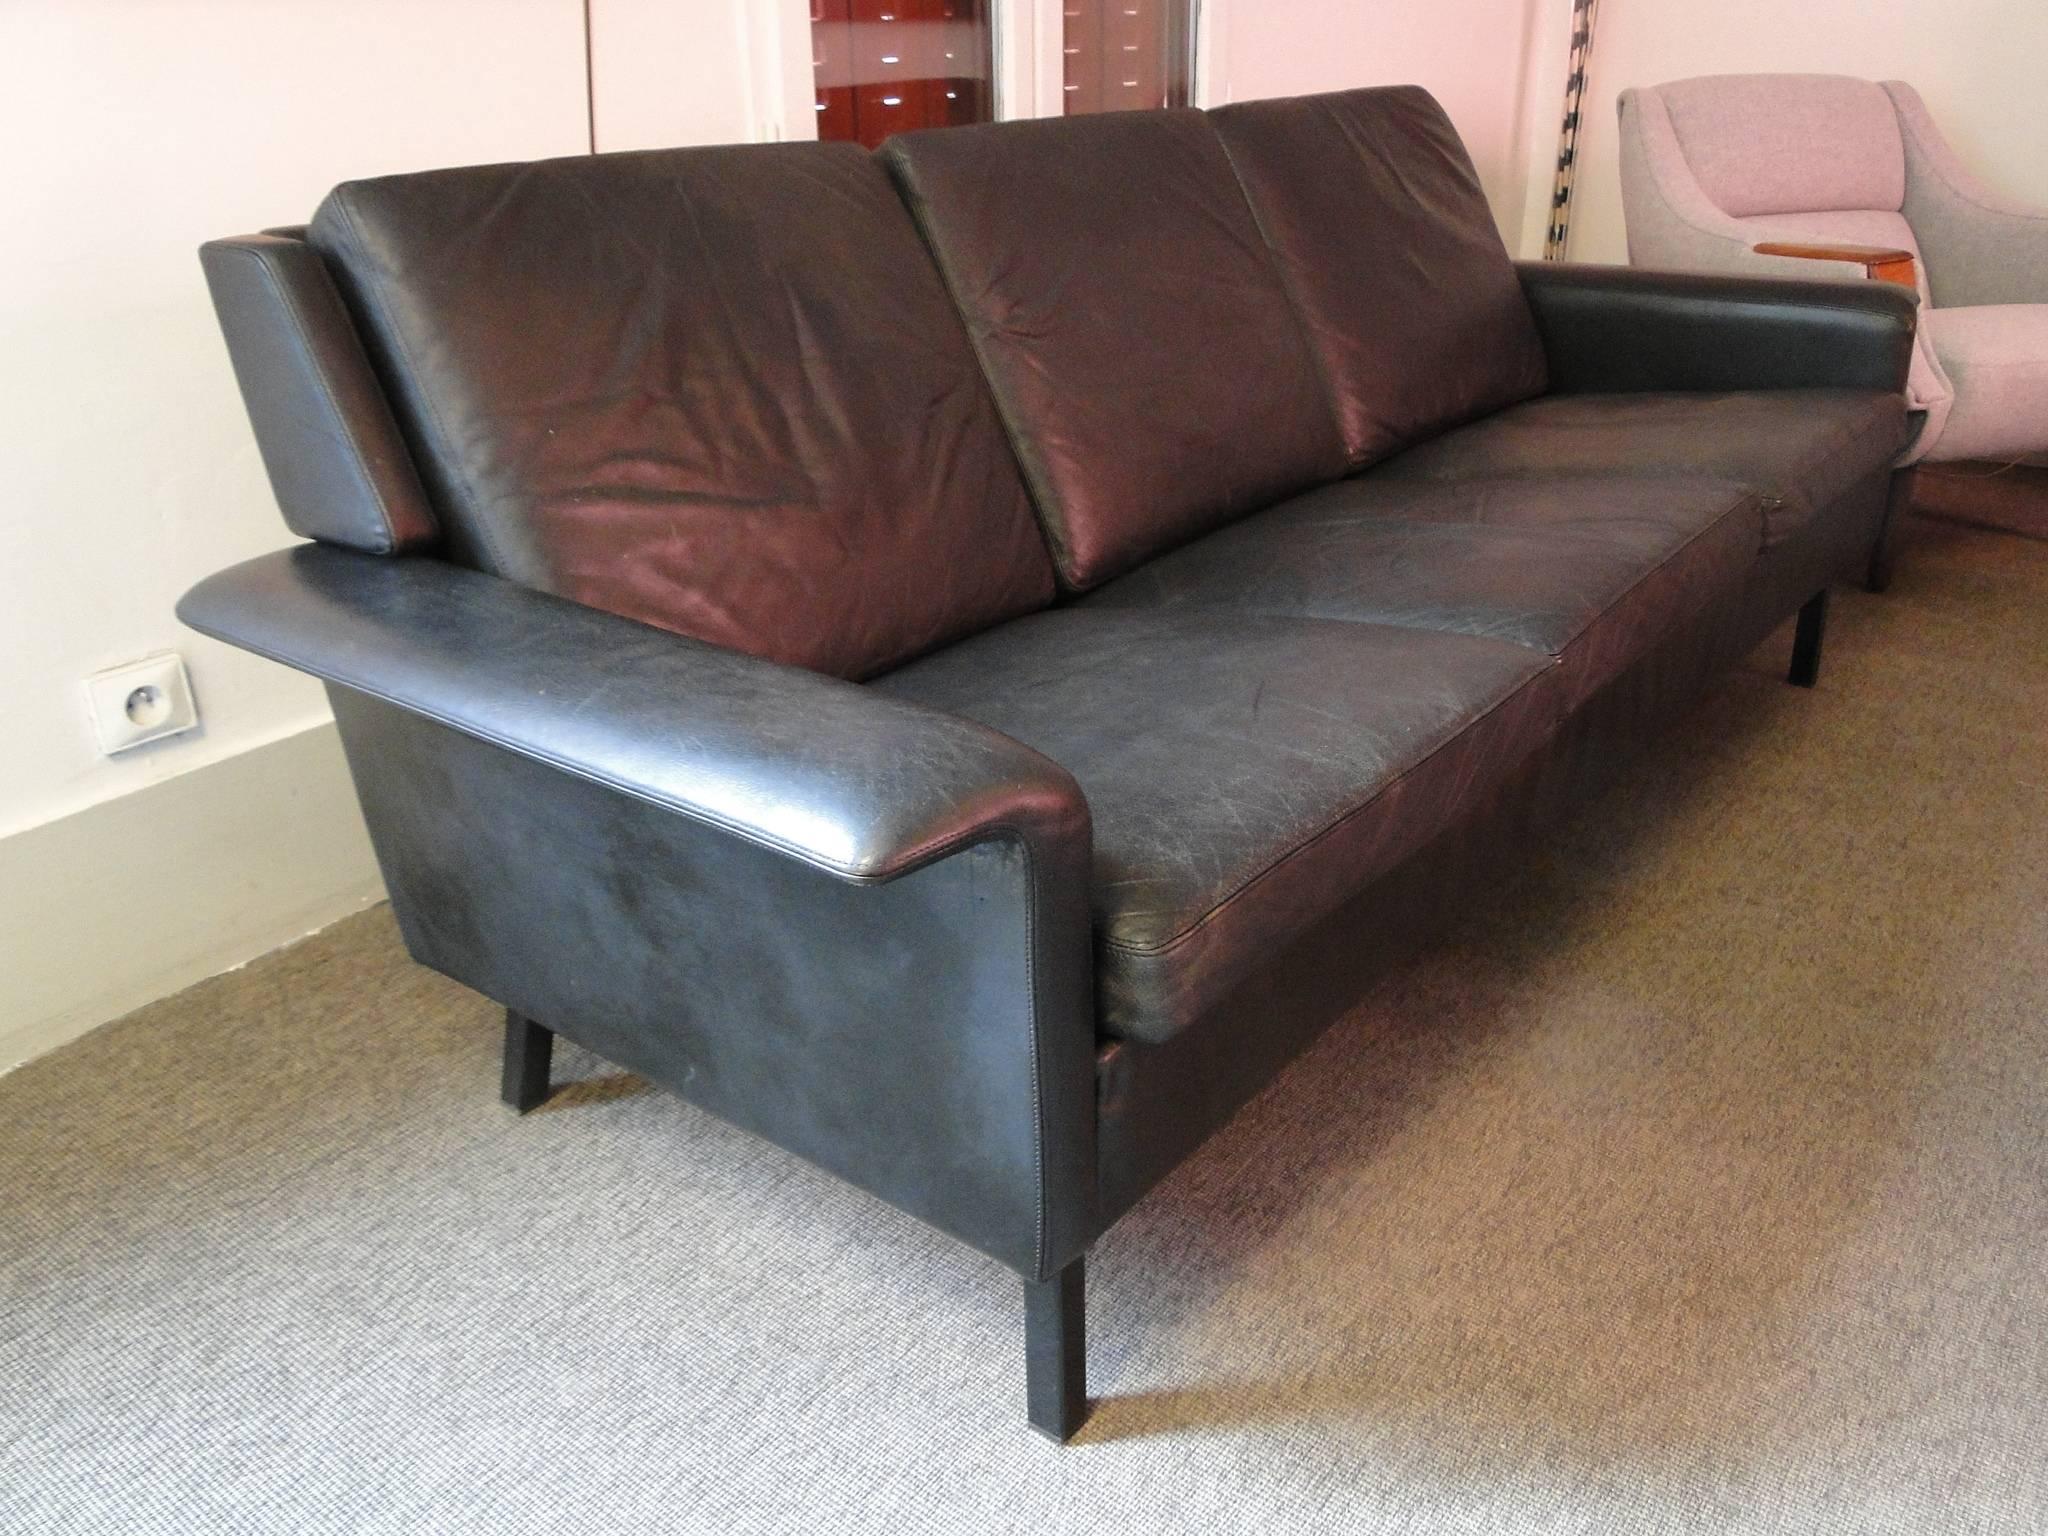 Confortable down-filled sofa designed by Arne Vodder for Fritz Hansen.